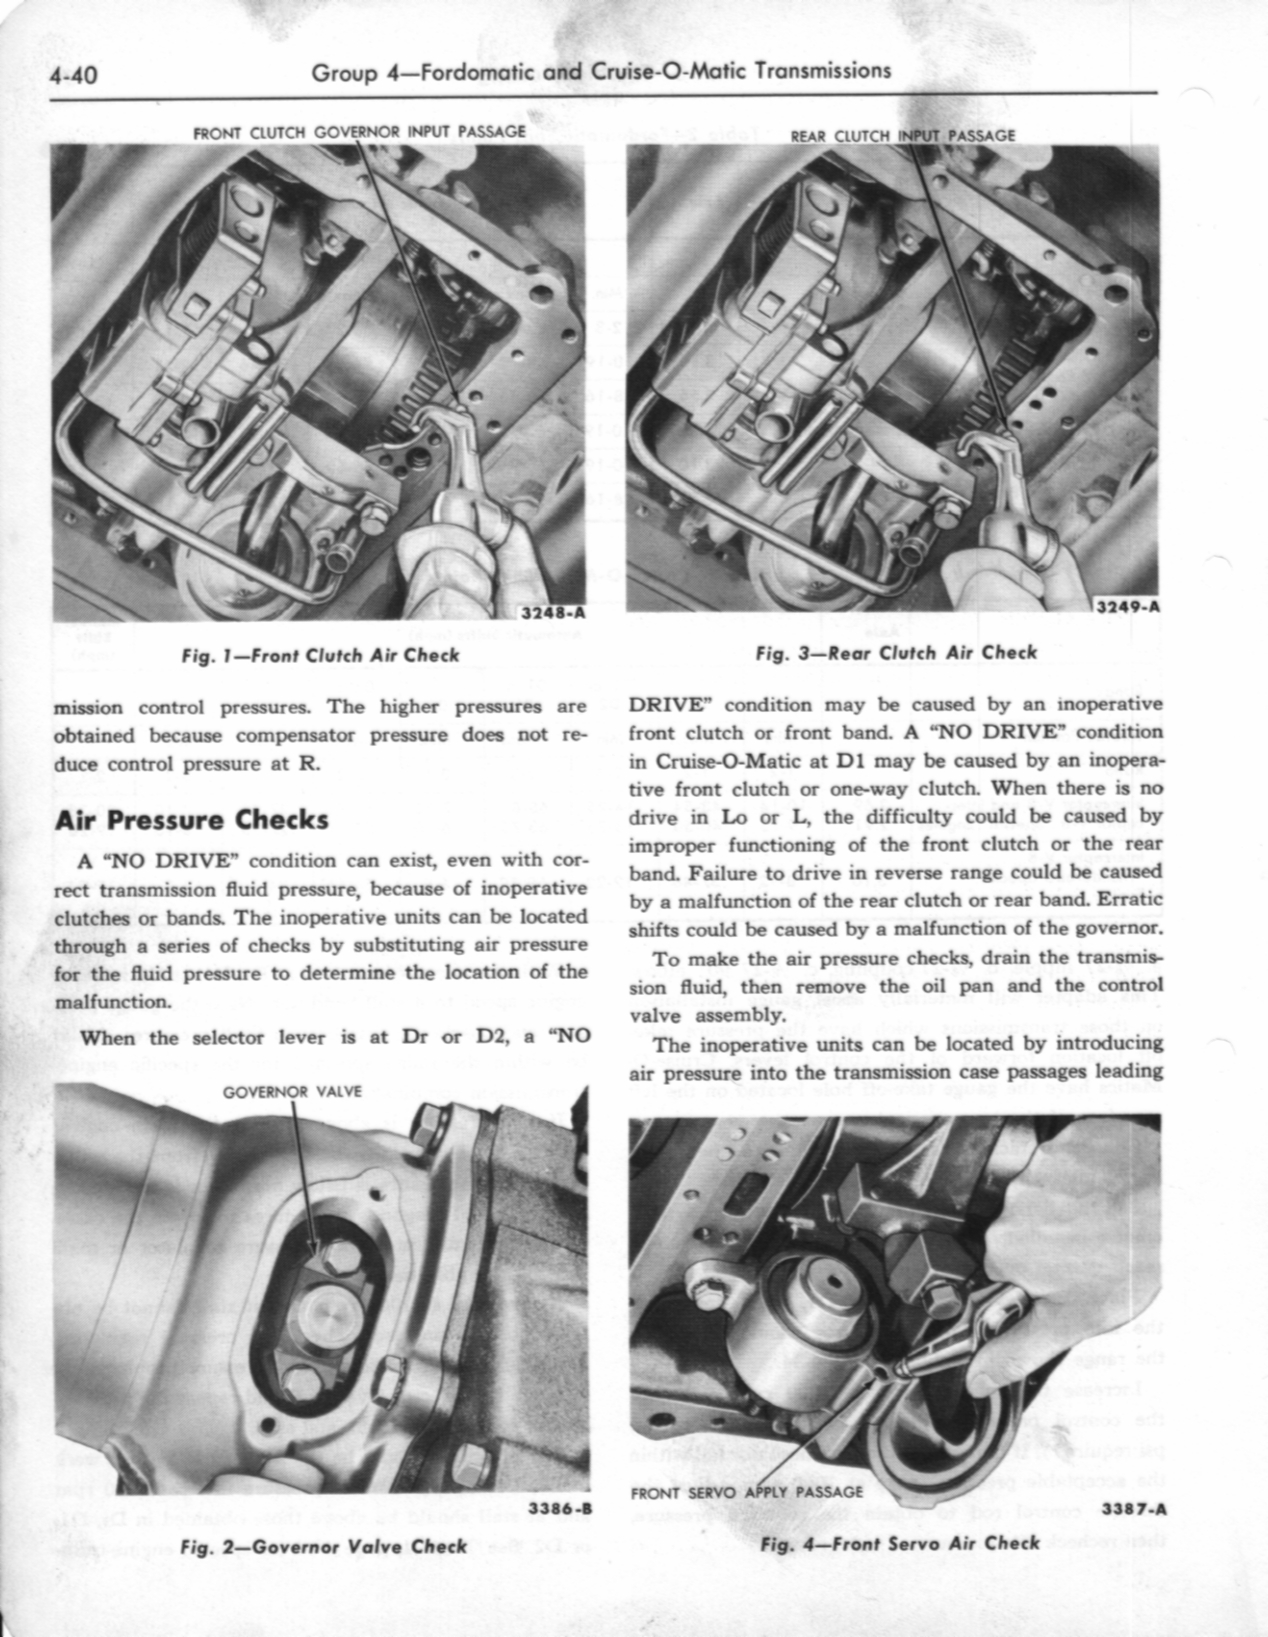 1958 Ford cruise-o-matic transmission #5